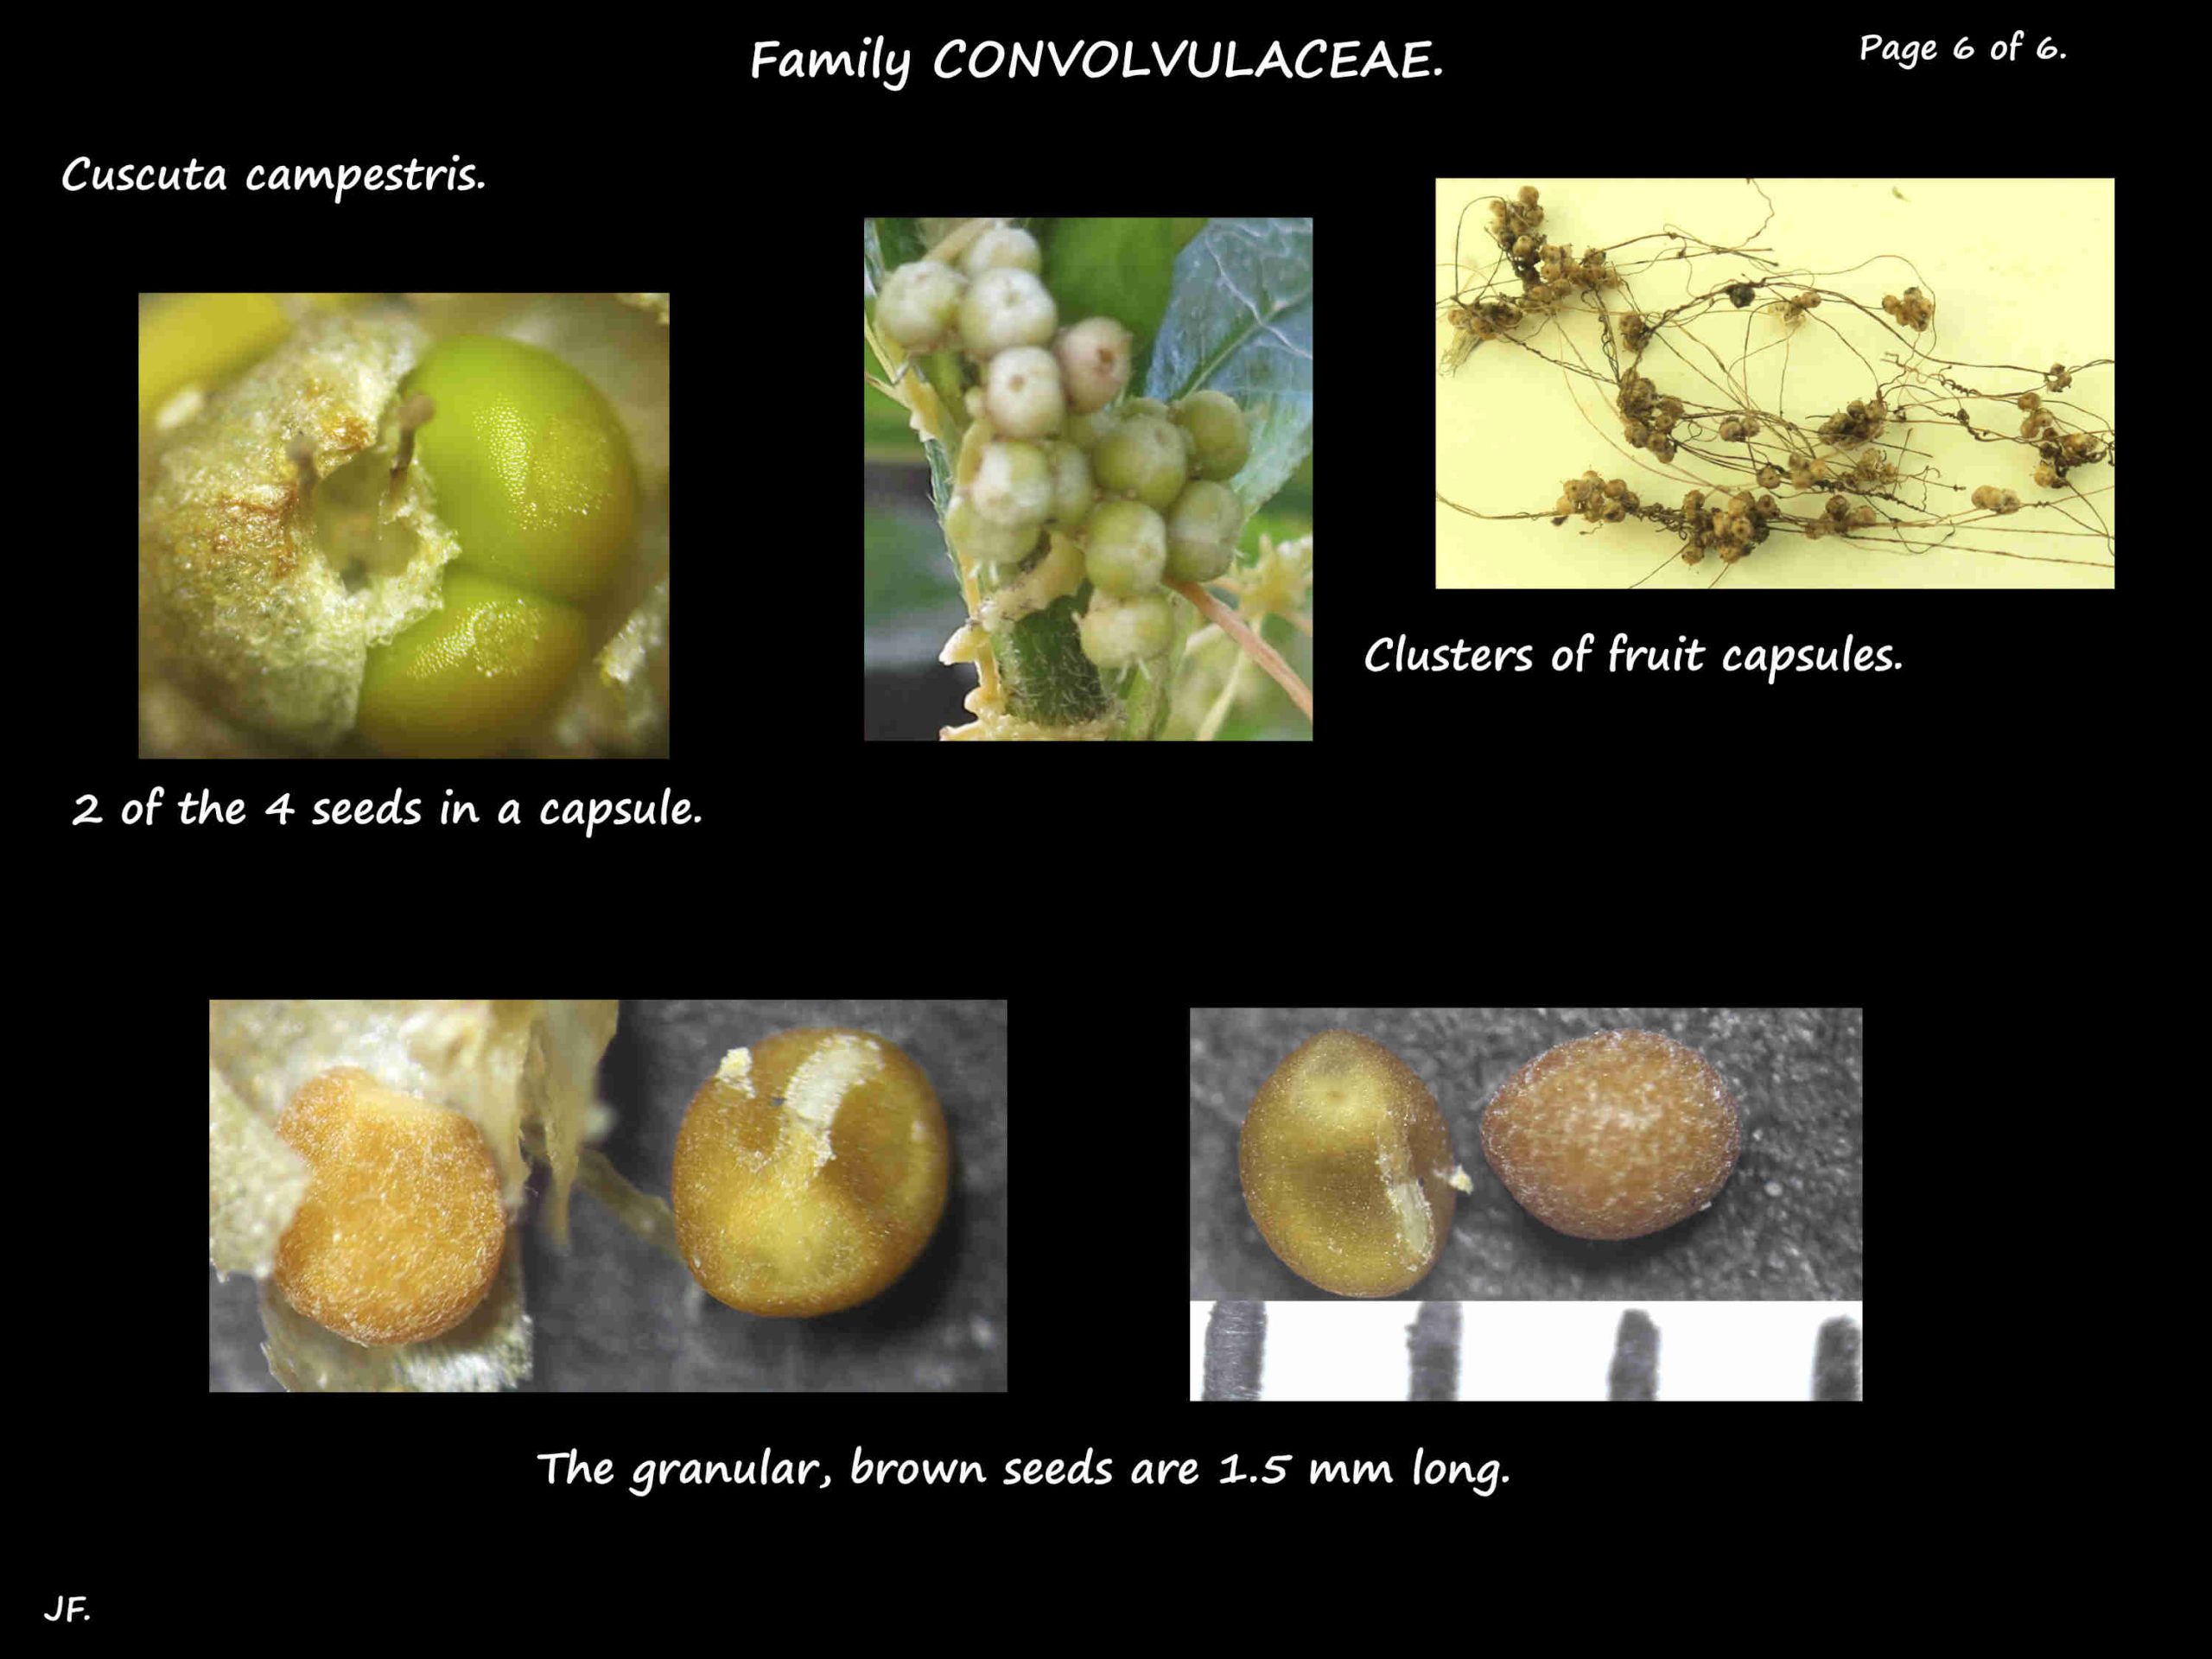 6 Seeds of Cuscuta campestris